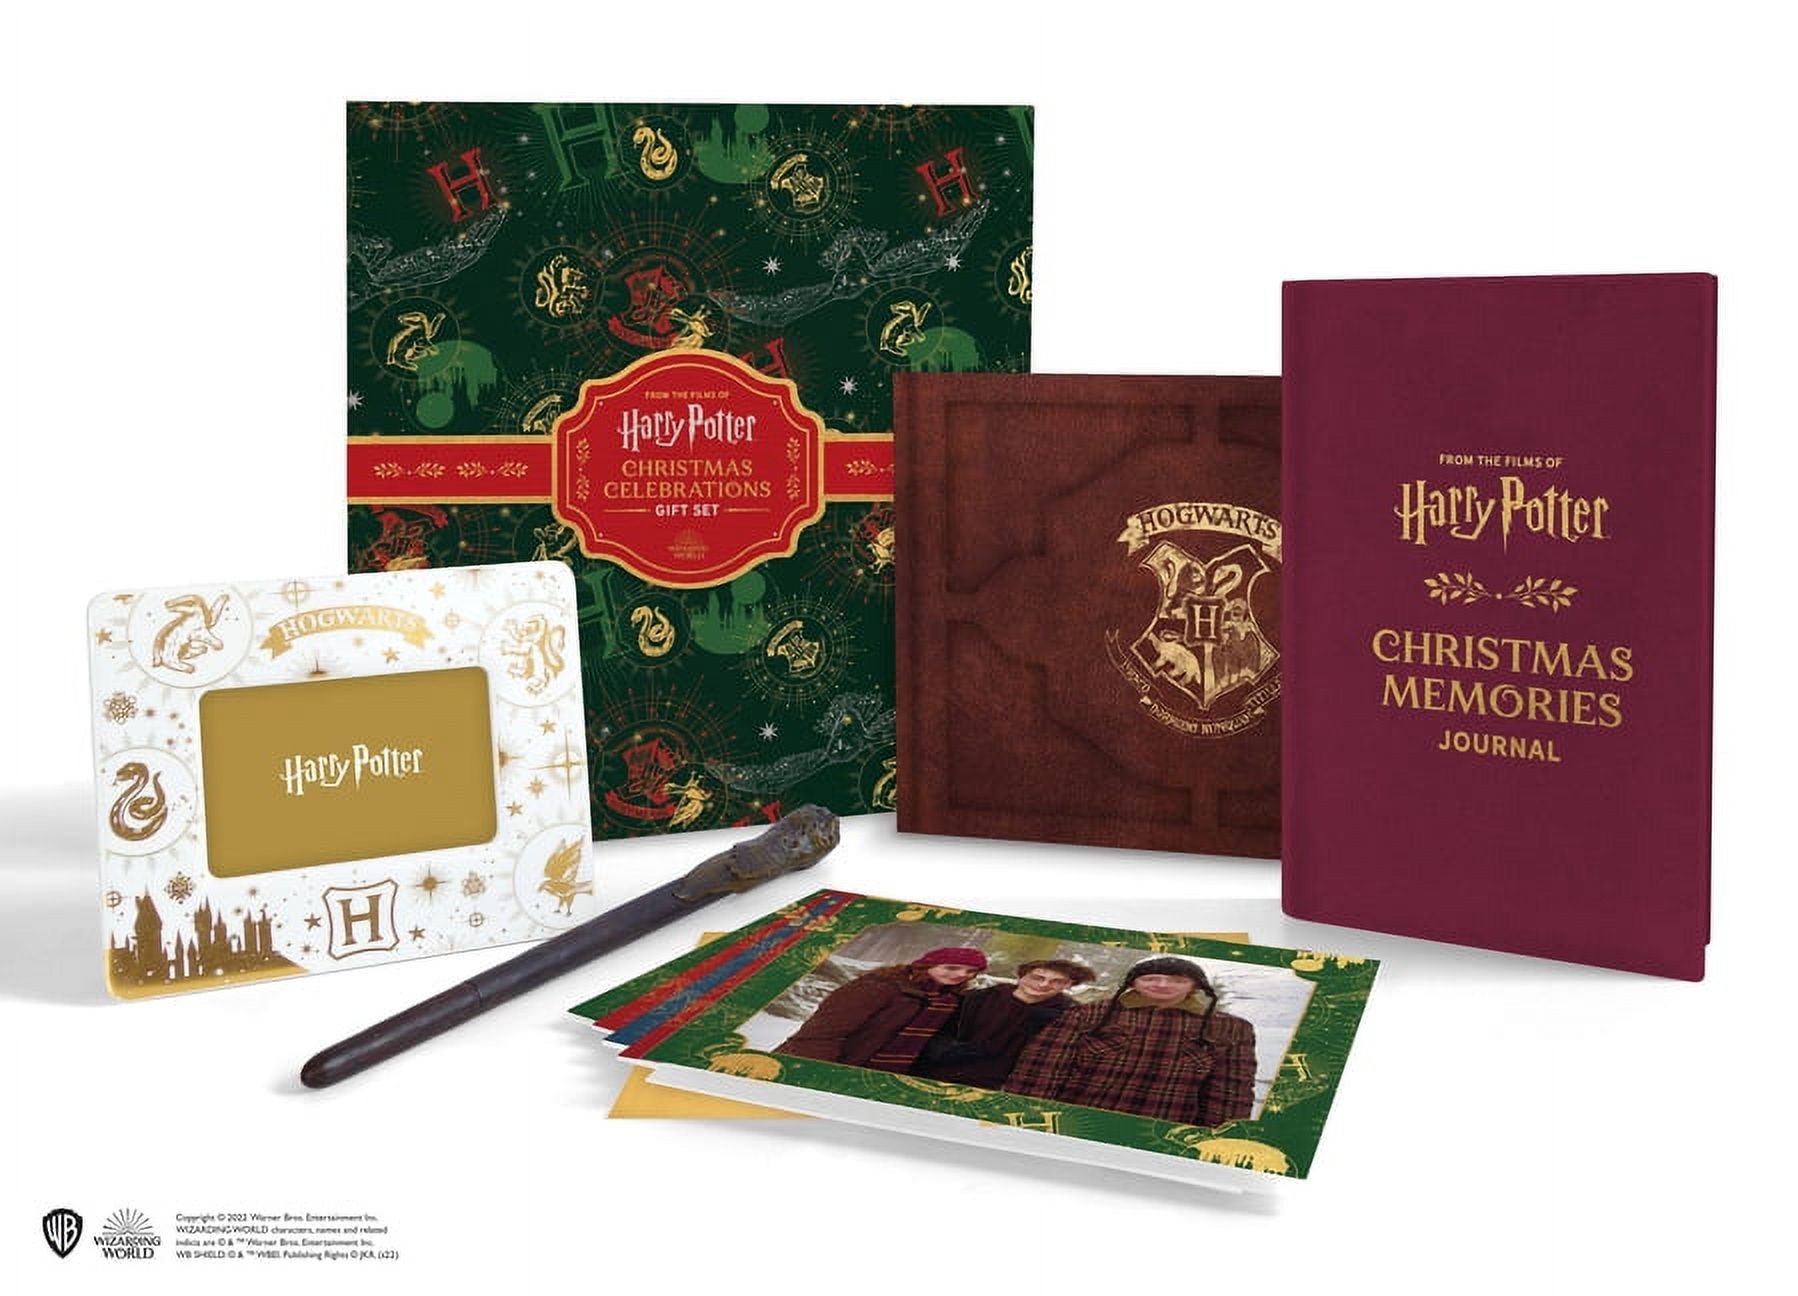 Harry Potter: Christmas Celebrations Gift Set [Book]